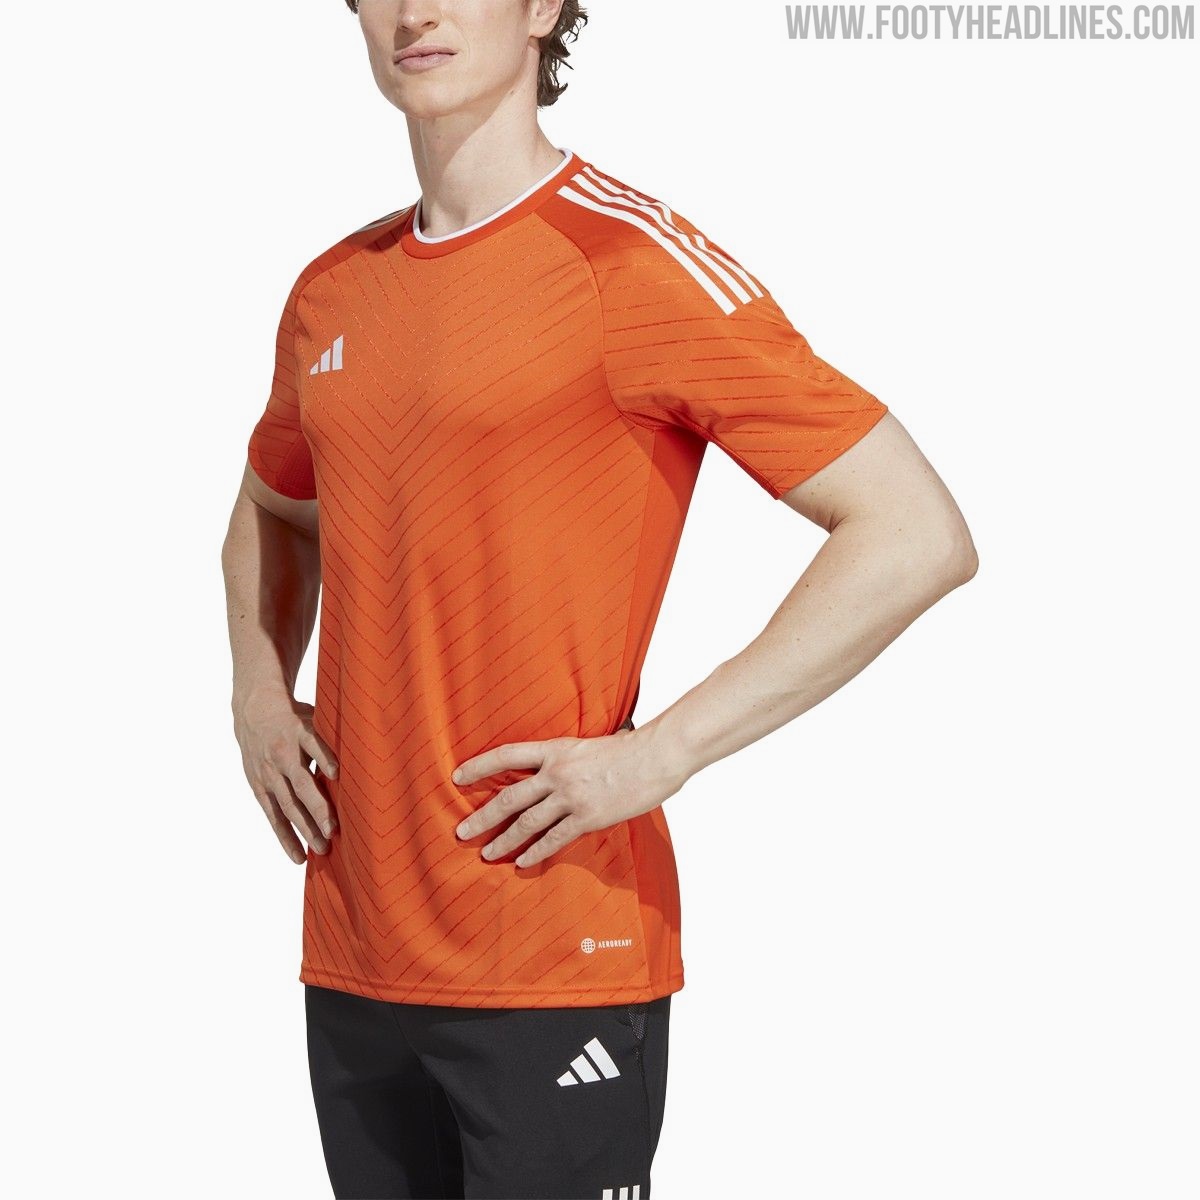 New Adidas Campeon 23 Teamwear Kit Leaked - 9 Colorways - Footy Headlines